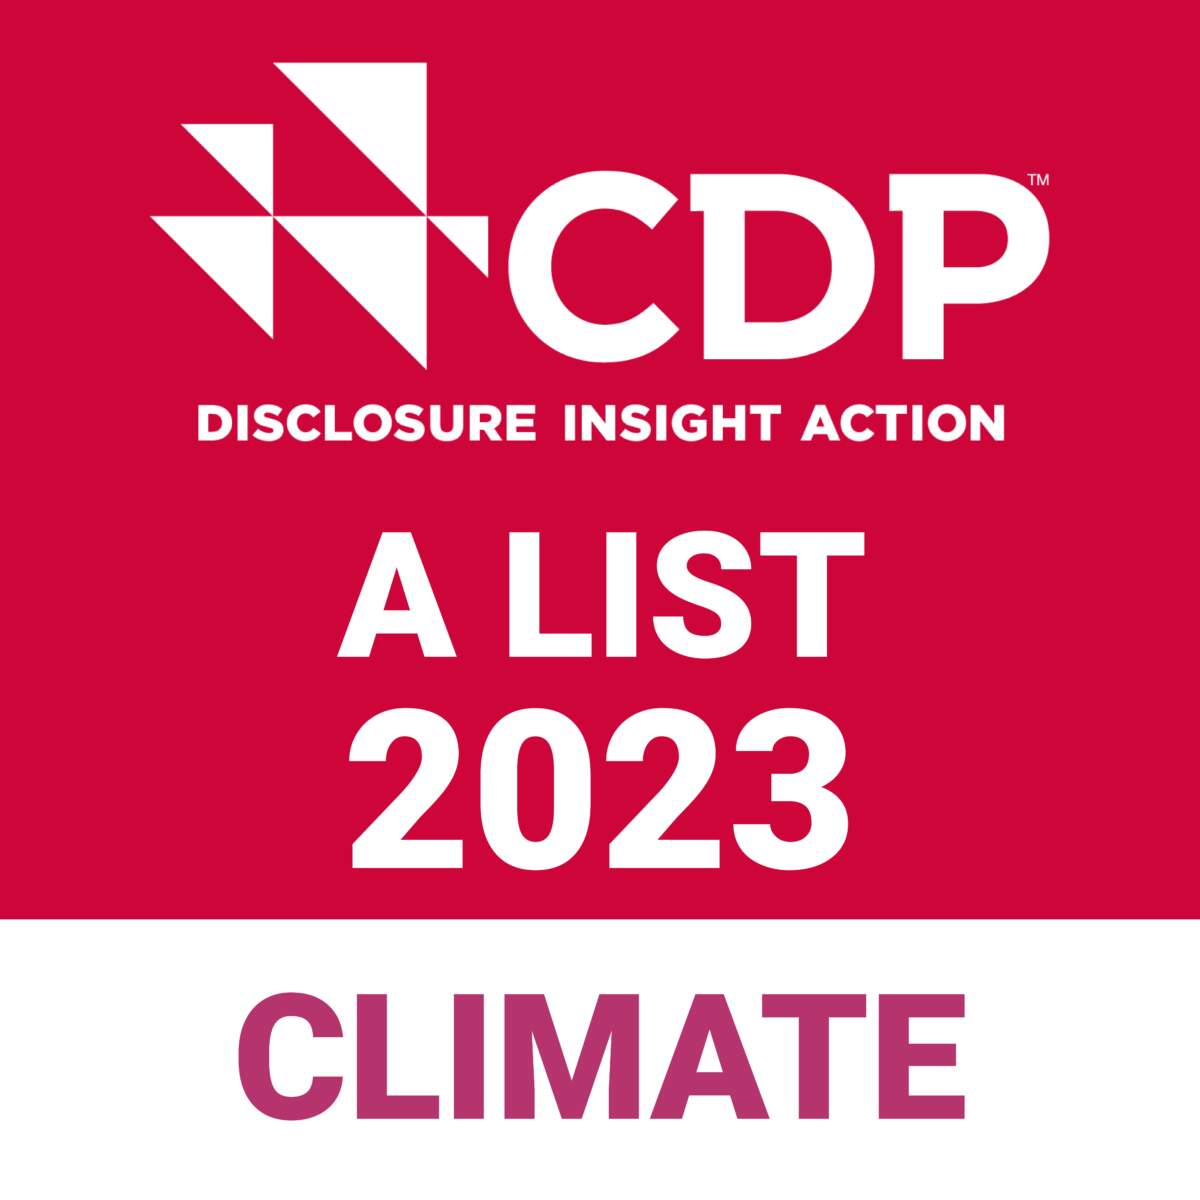 Canon ทำคะแนนสูงสุดระดับ A ด้านการรับมือกับการเปลี่ยนแปลงสภาพภูมิอากาศ ในรายงานการประเมินของ CDP ประจำปี 2566